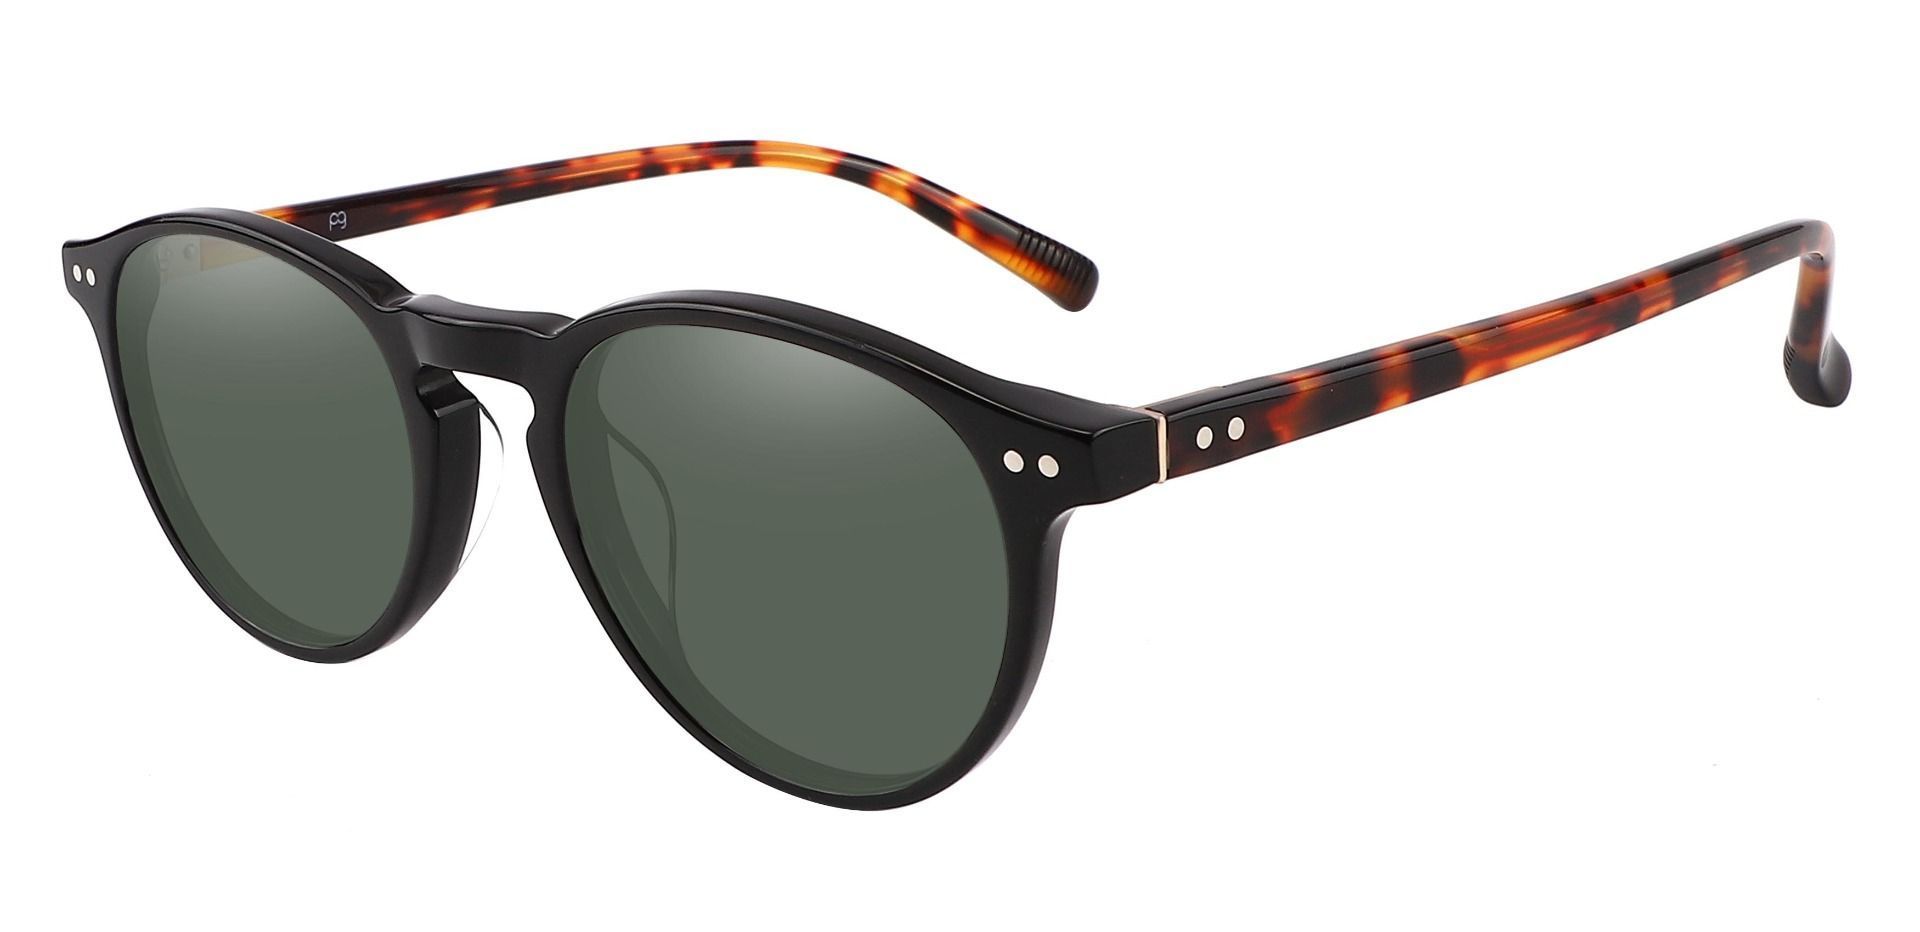 Monarch Oval Progressive Sunglasses - Black Frame With Green Lenses